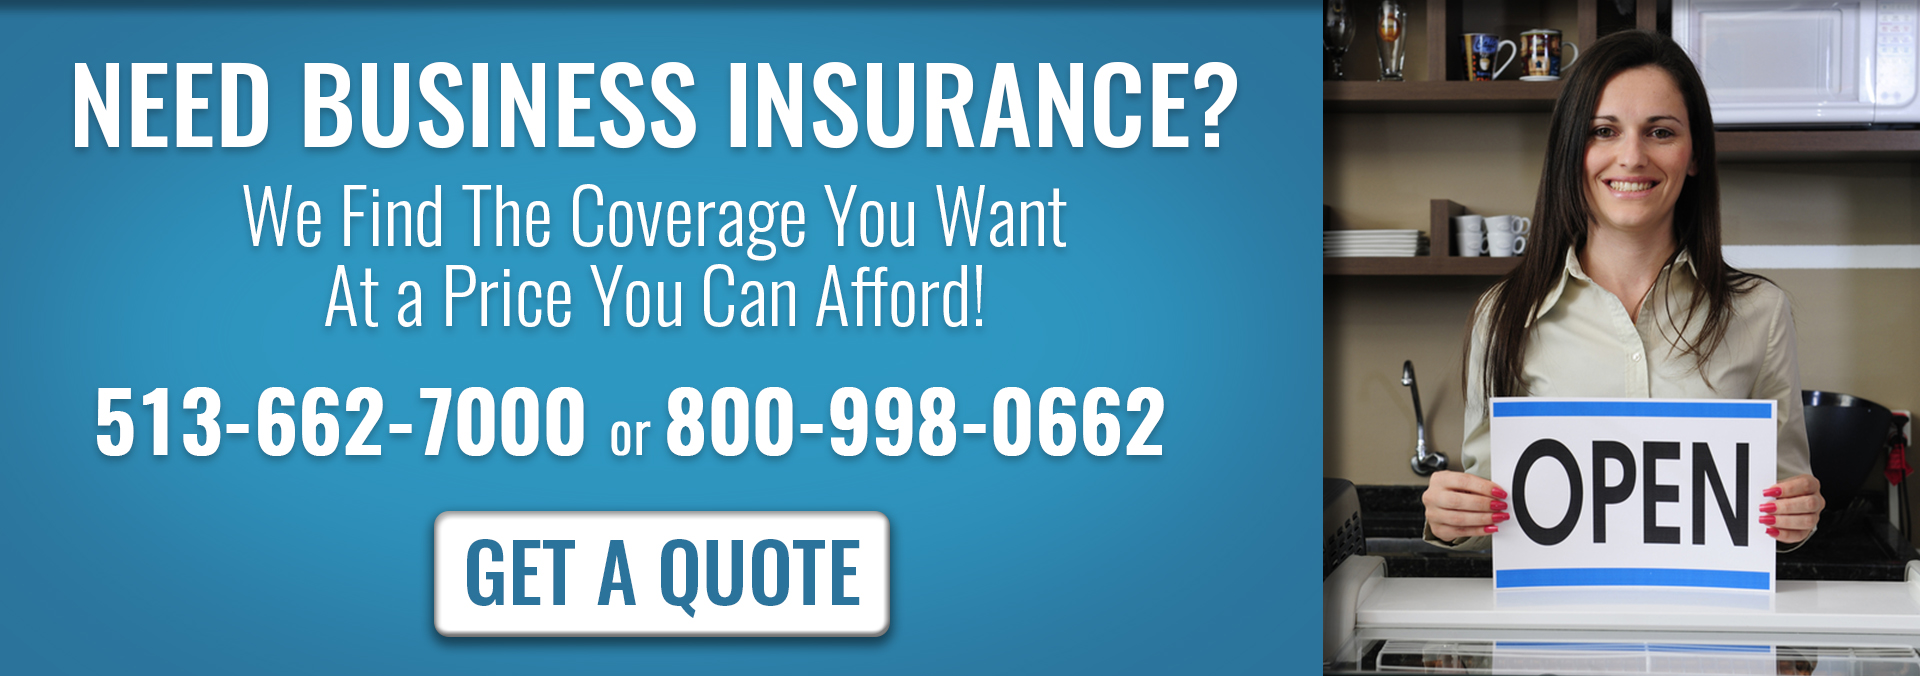 win-homeinsurance slide business